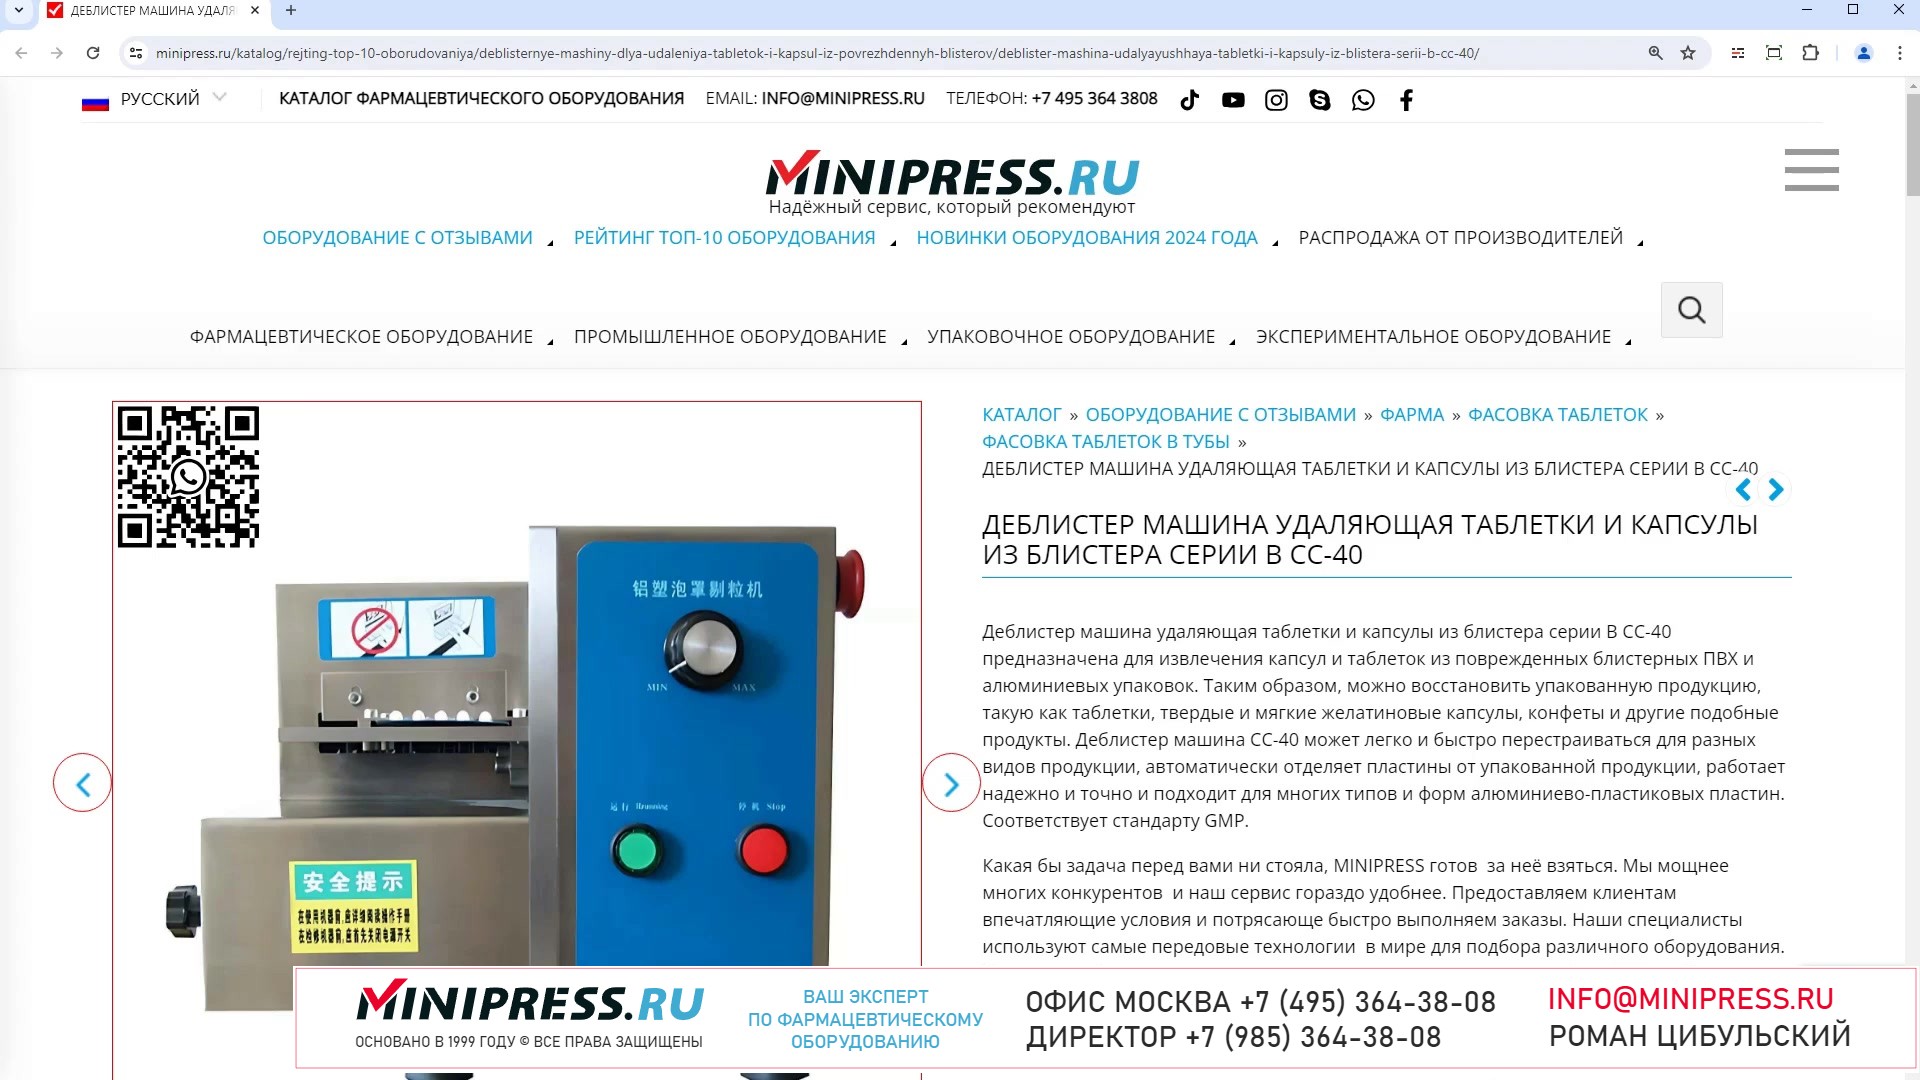 Minipress.ru Деблистер машина удаляющая таблетки и капсулы из блистера серии B CC-40